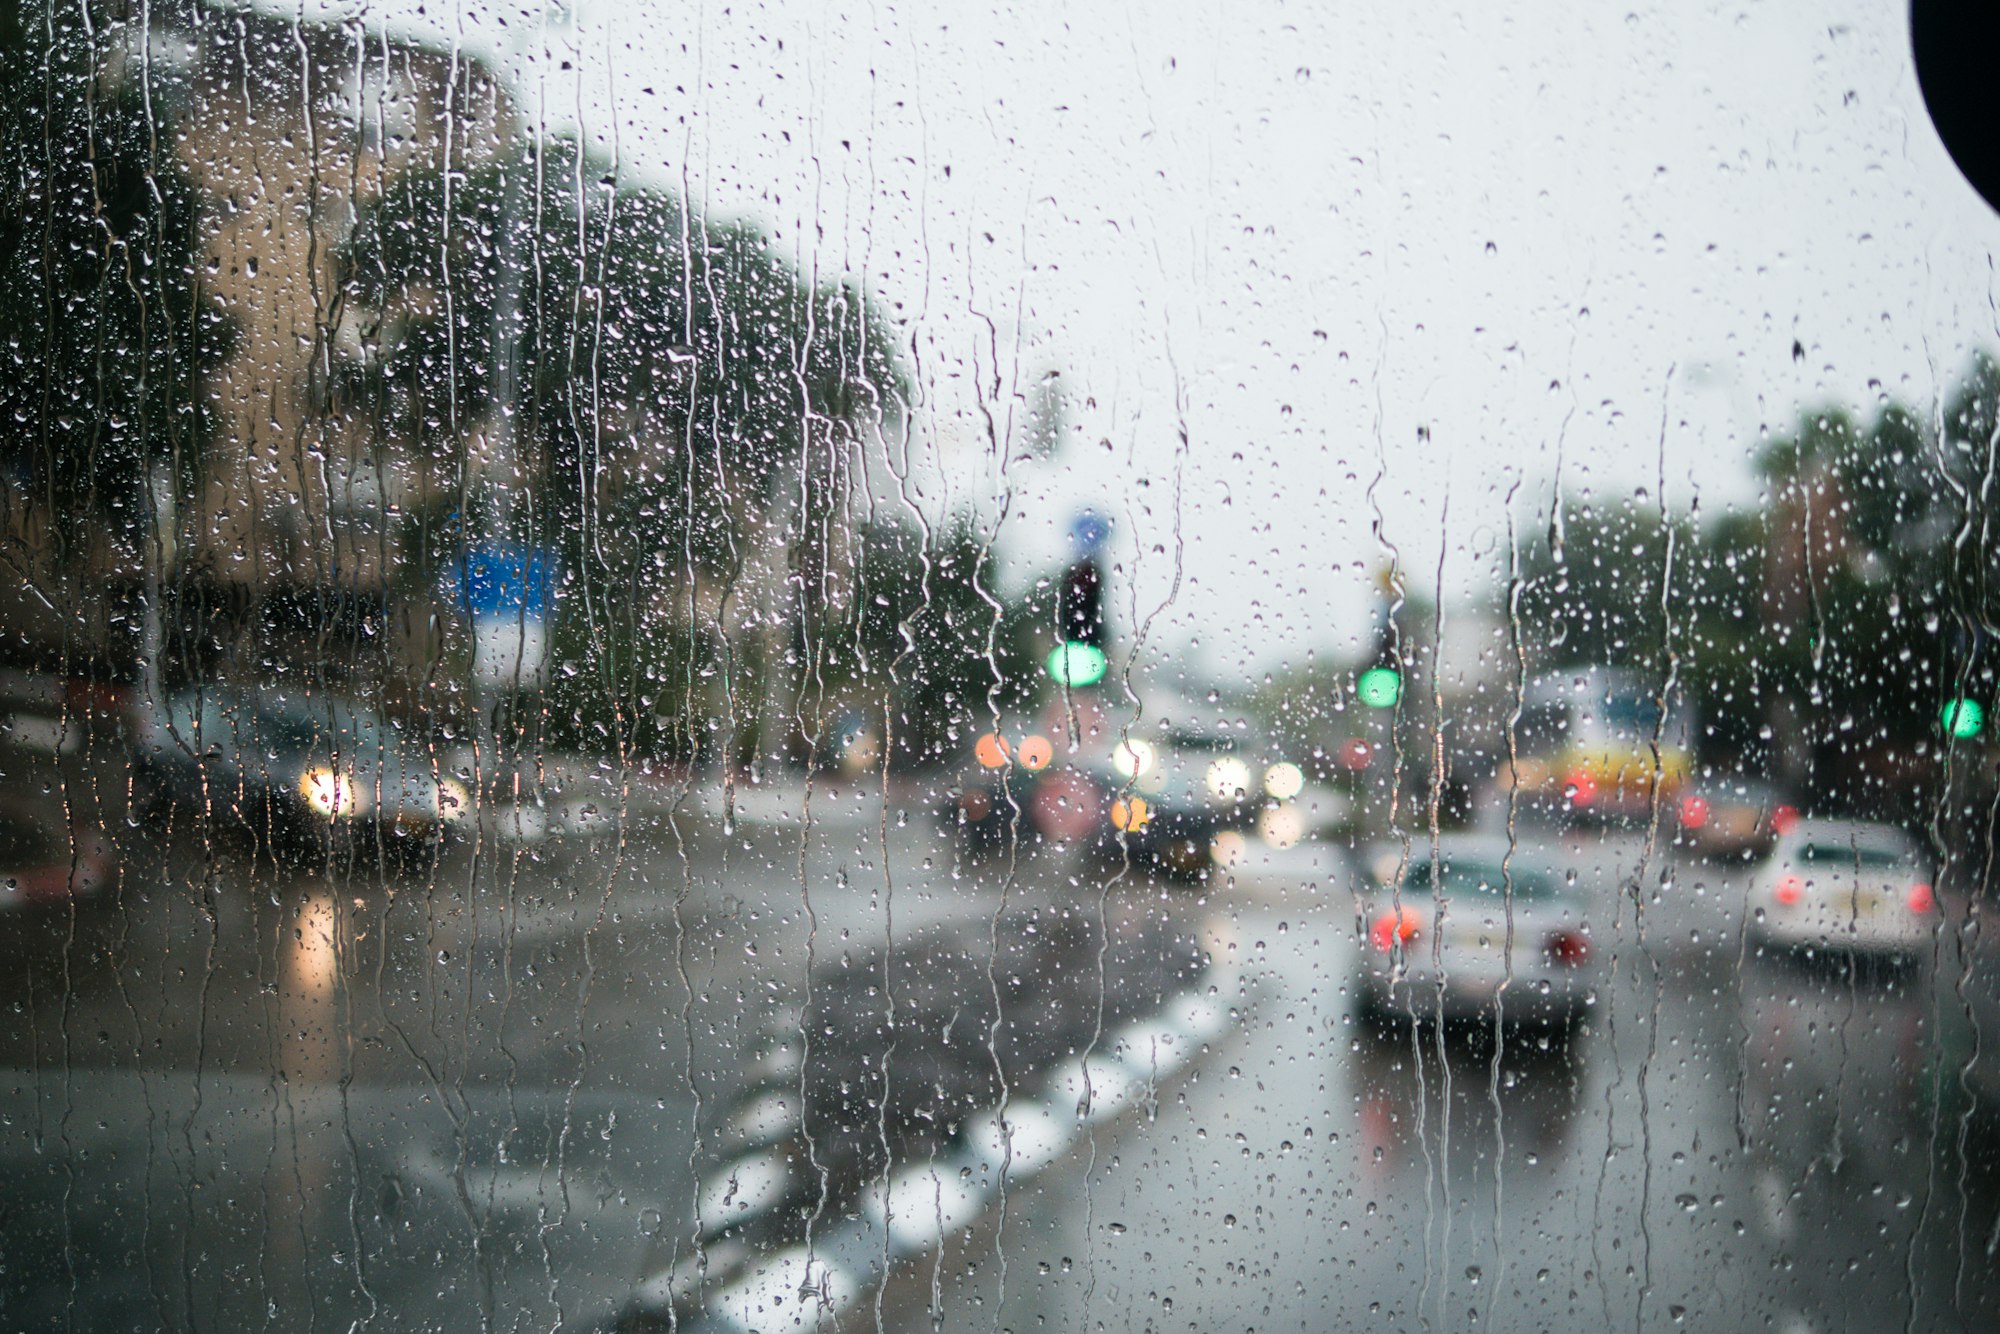 Israel rain view to street through rain-specked window